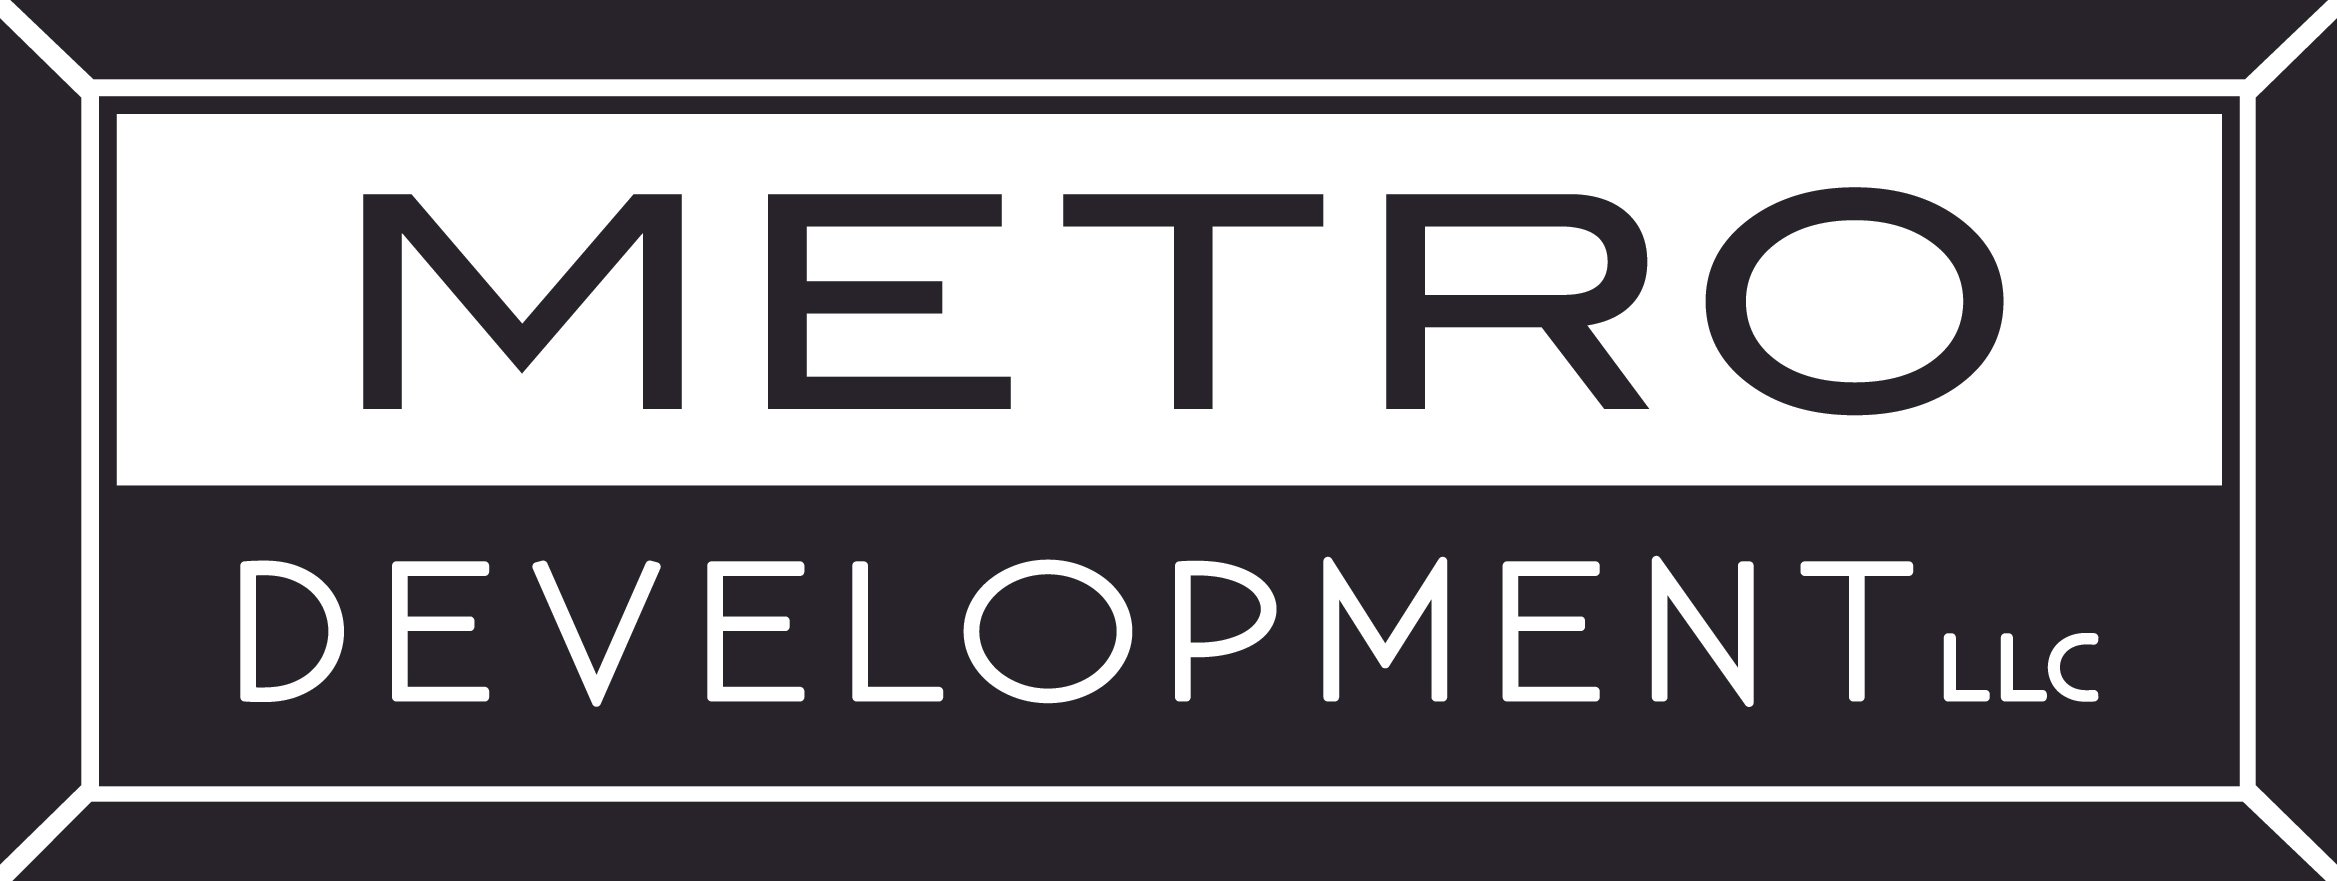 Metro Development (1).jpg